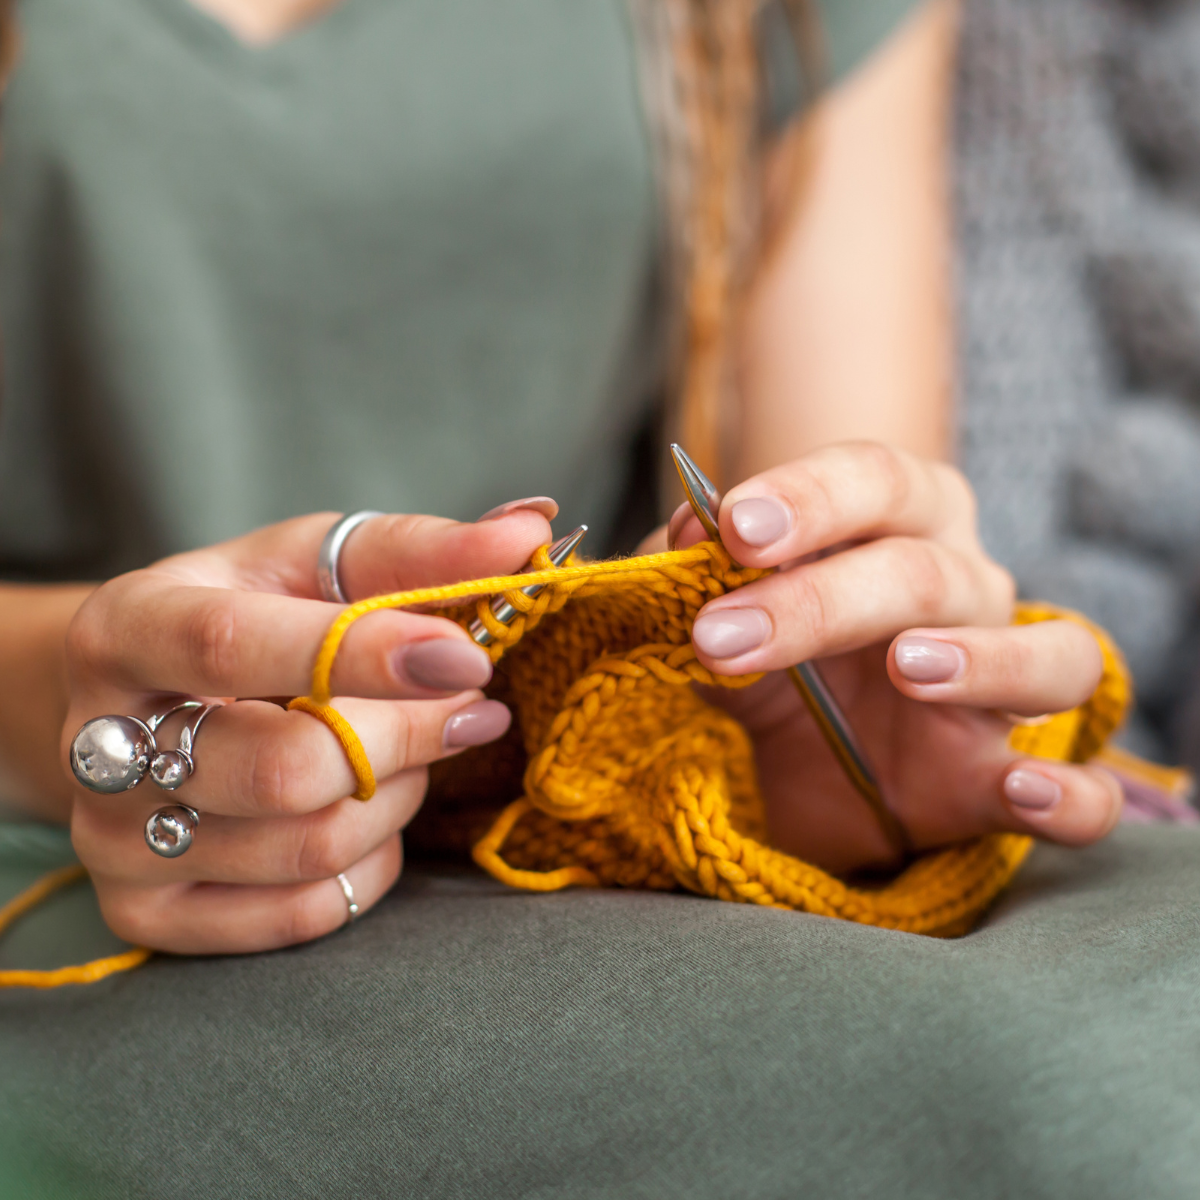 Women knitting yellow yarn